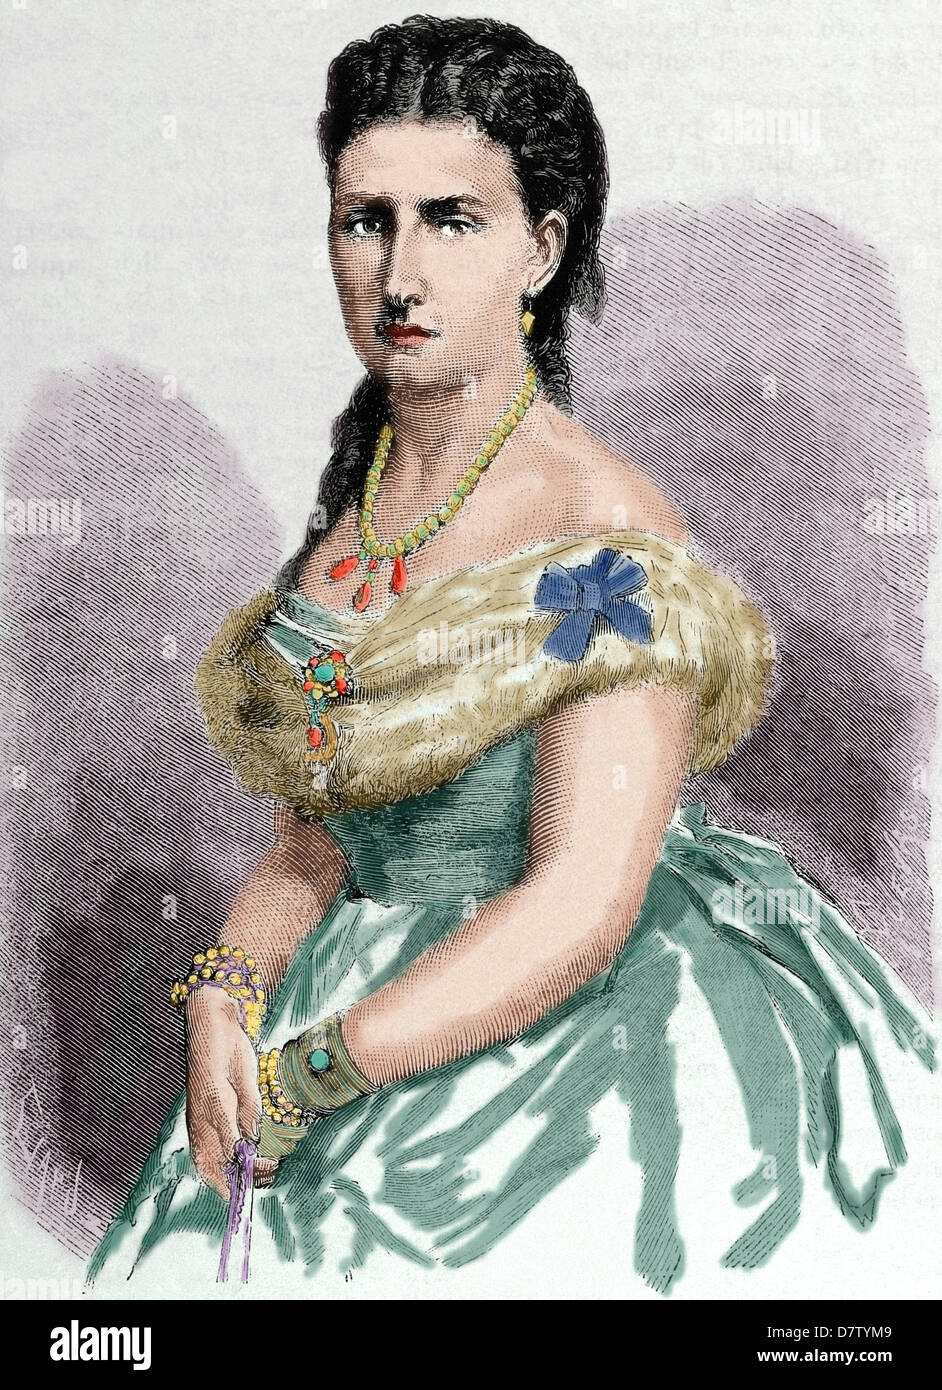 Infanta Antonia of Portugal or Braganza. (1845-1913). House of Braganza-Saxe-Coburg and Gotha. Portrait. Engraving. Colored. Stock Photo